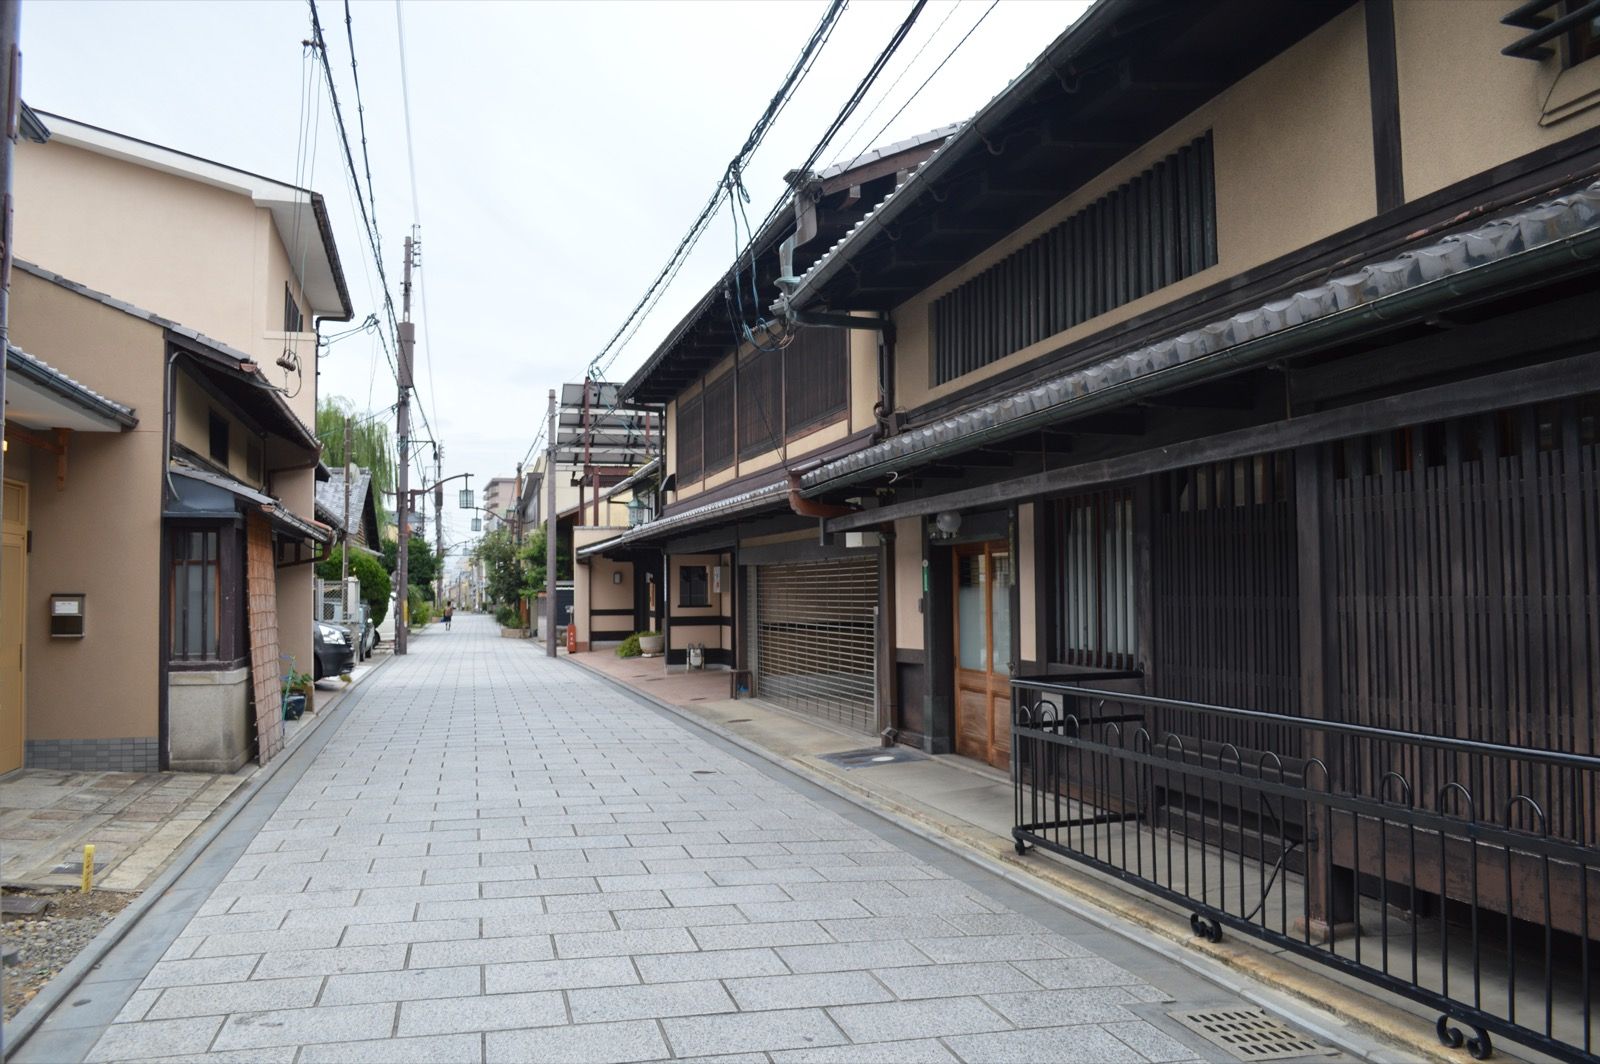 Photo of Nishijin, Japan (京都市上京区にある西陣地区、中心地の大黒町 by At by At)